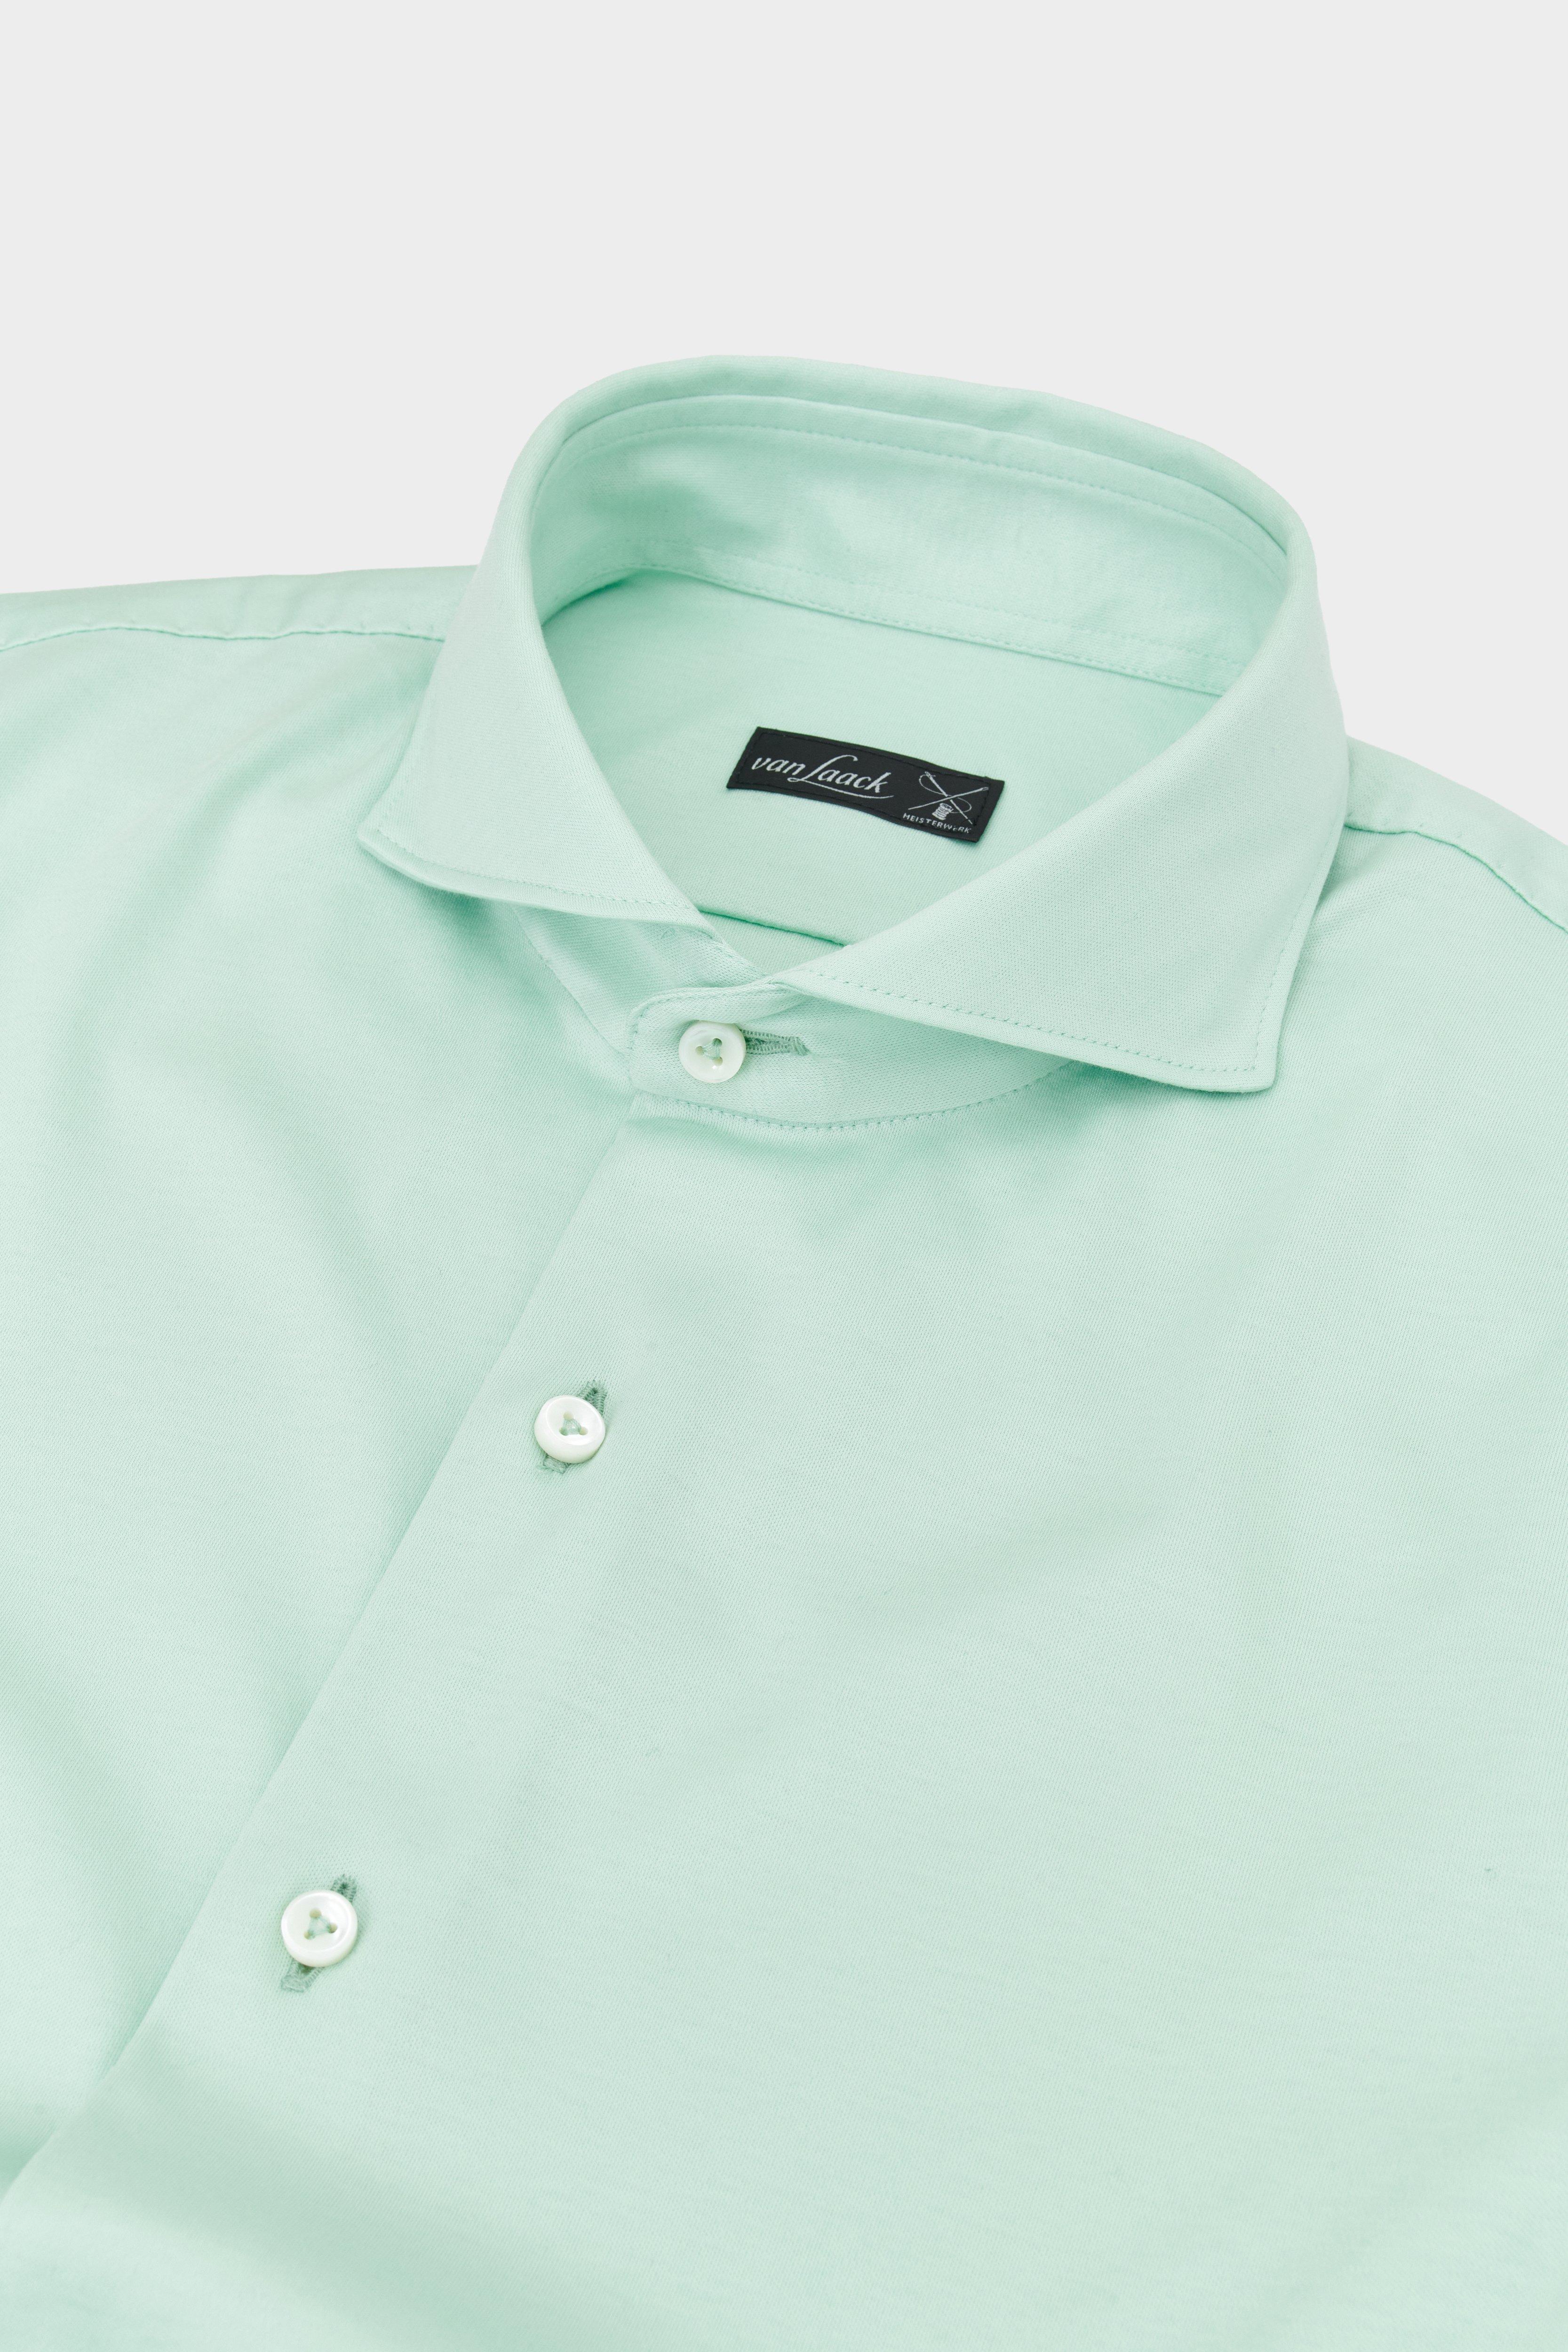 рубашка M PERON SSF светло-зеленый M-PERON-SSF_180031_910 ,photo 2